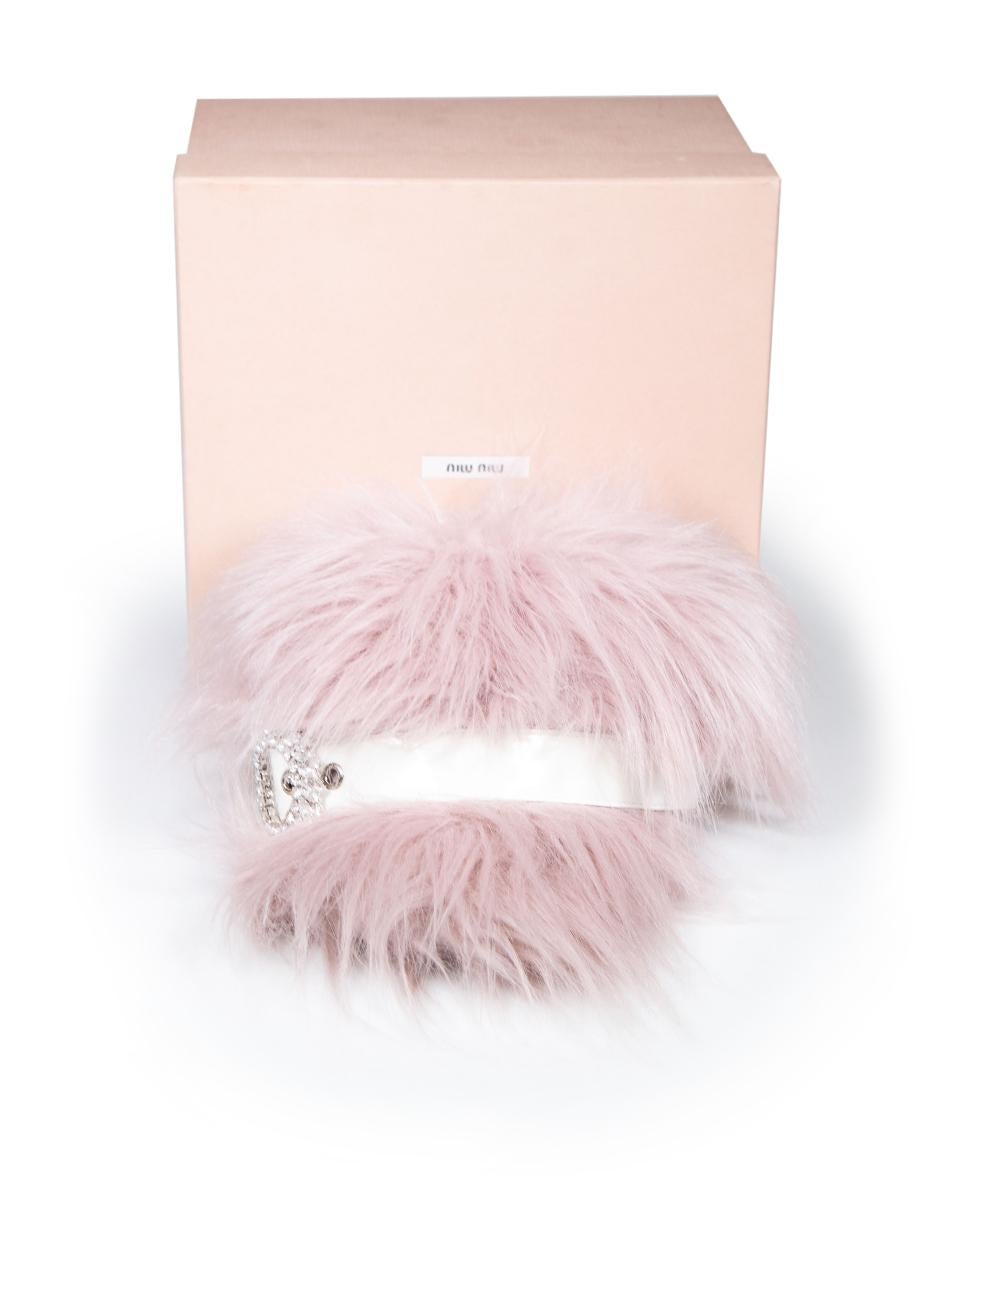 Miu Miu Pink Faux Fur Buckled Cap For Sale 3